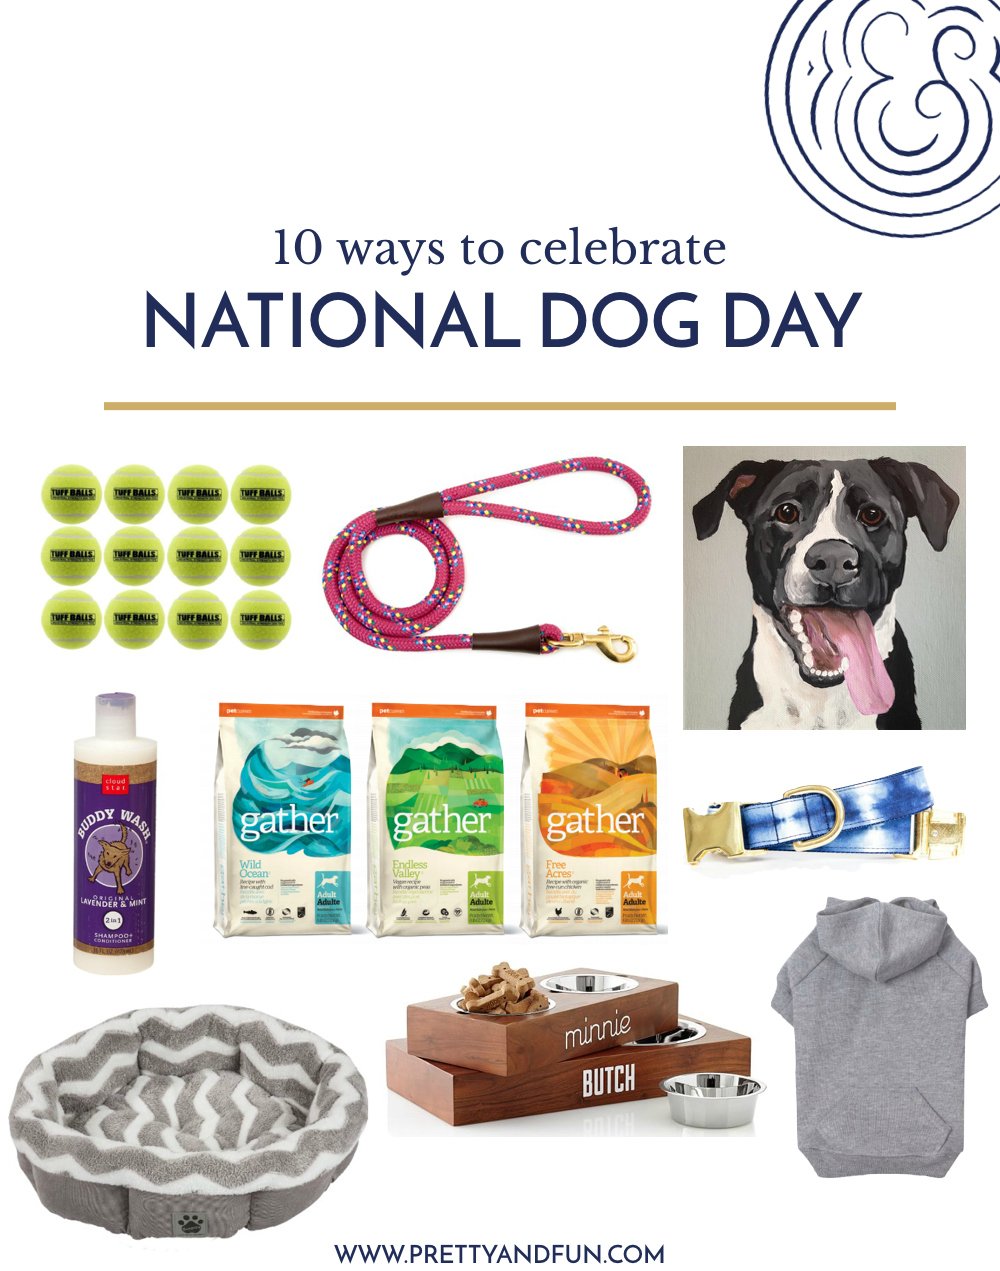 10 Ways to Celebrate National Dog Day.